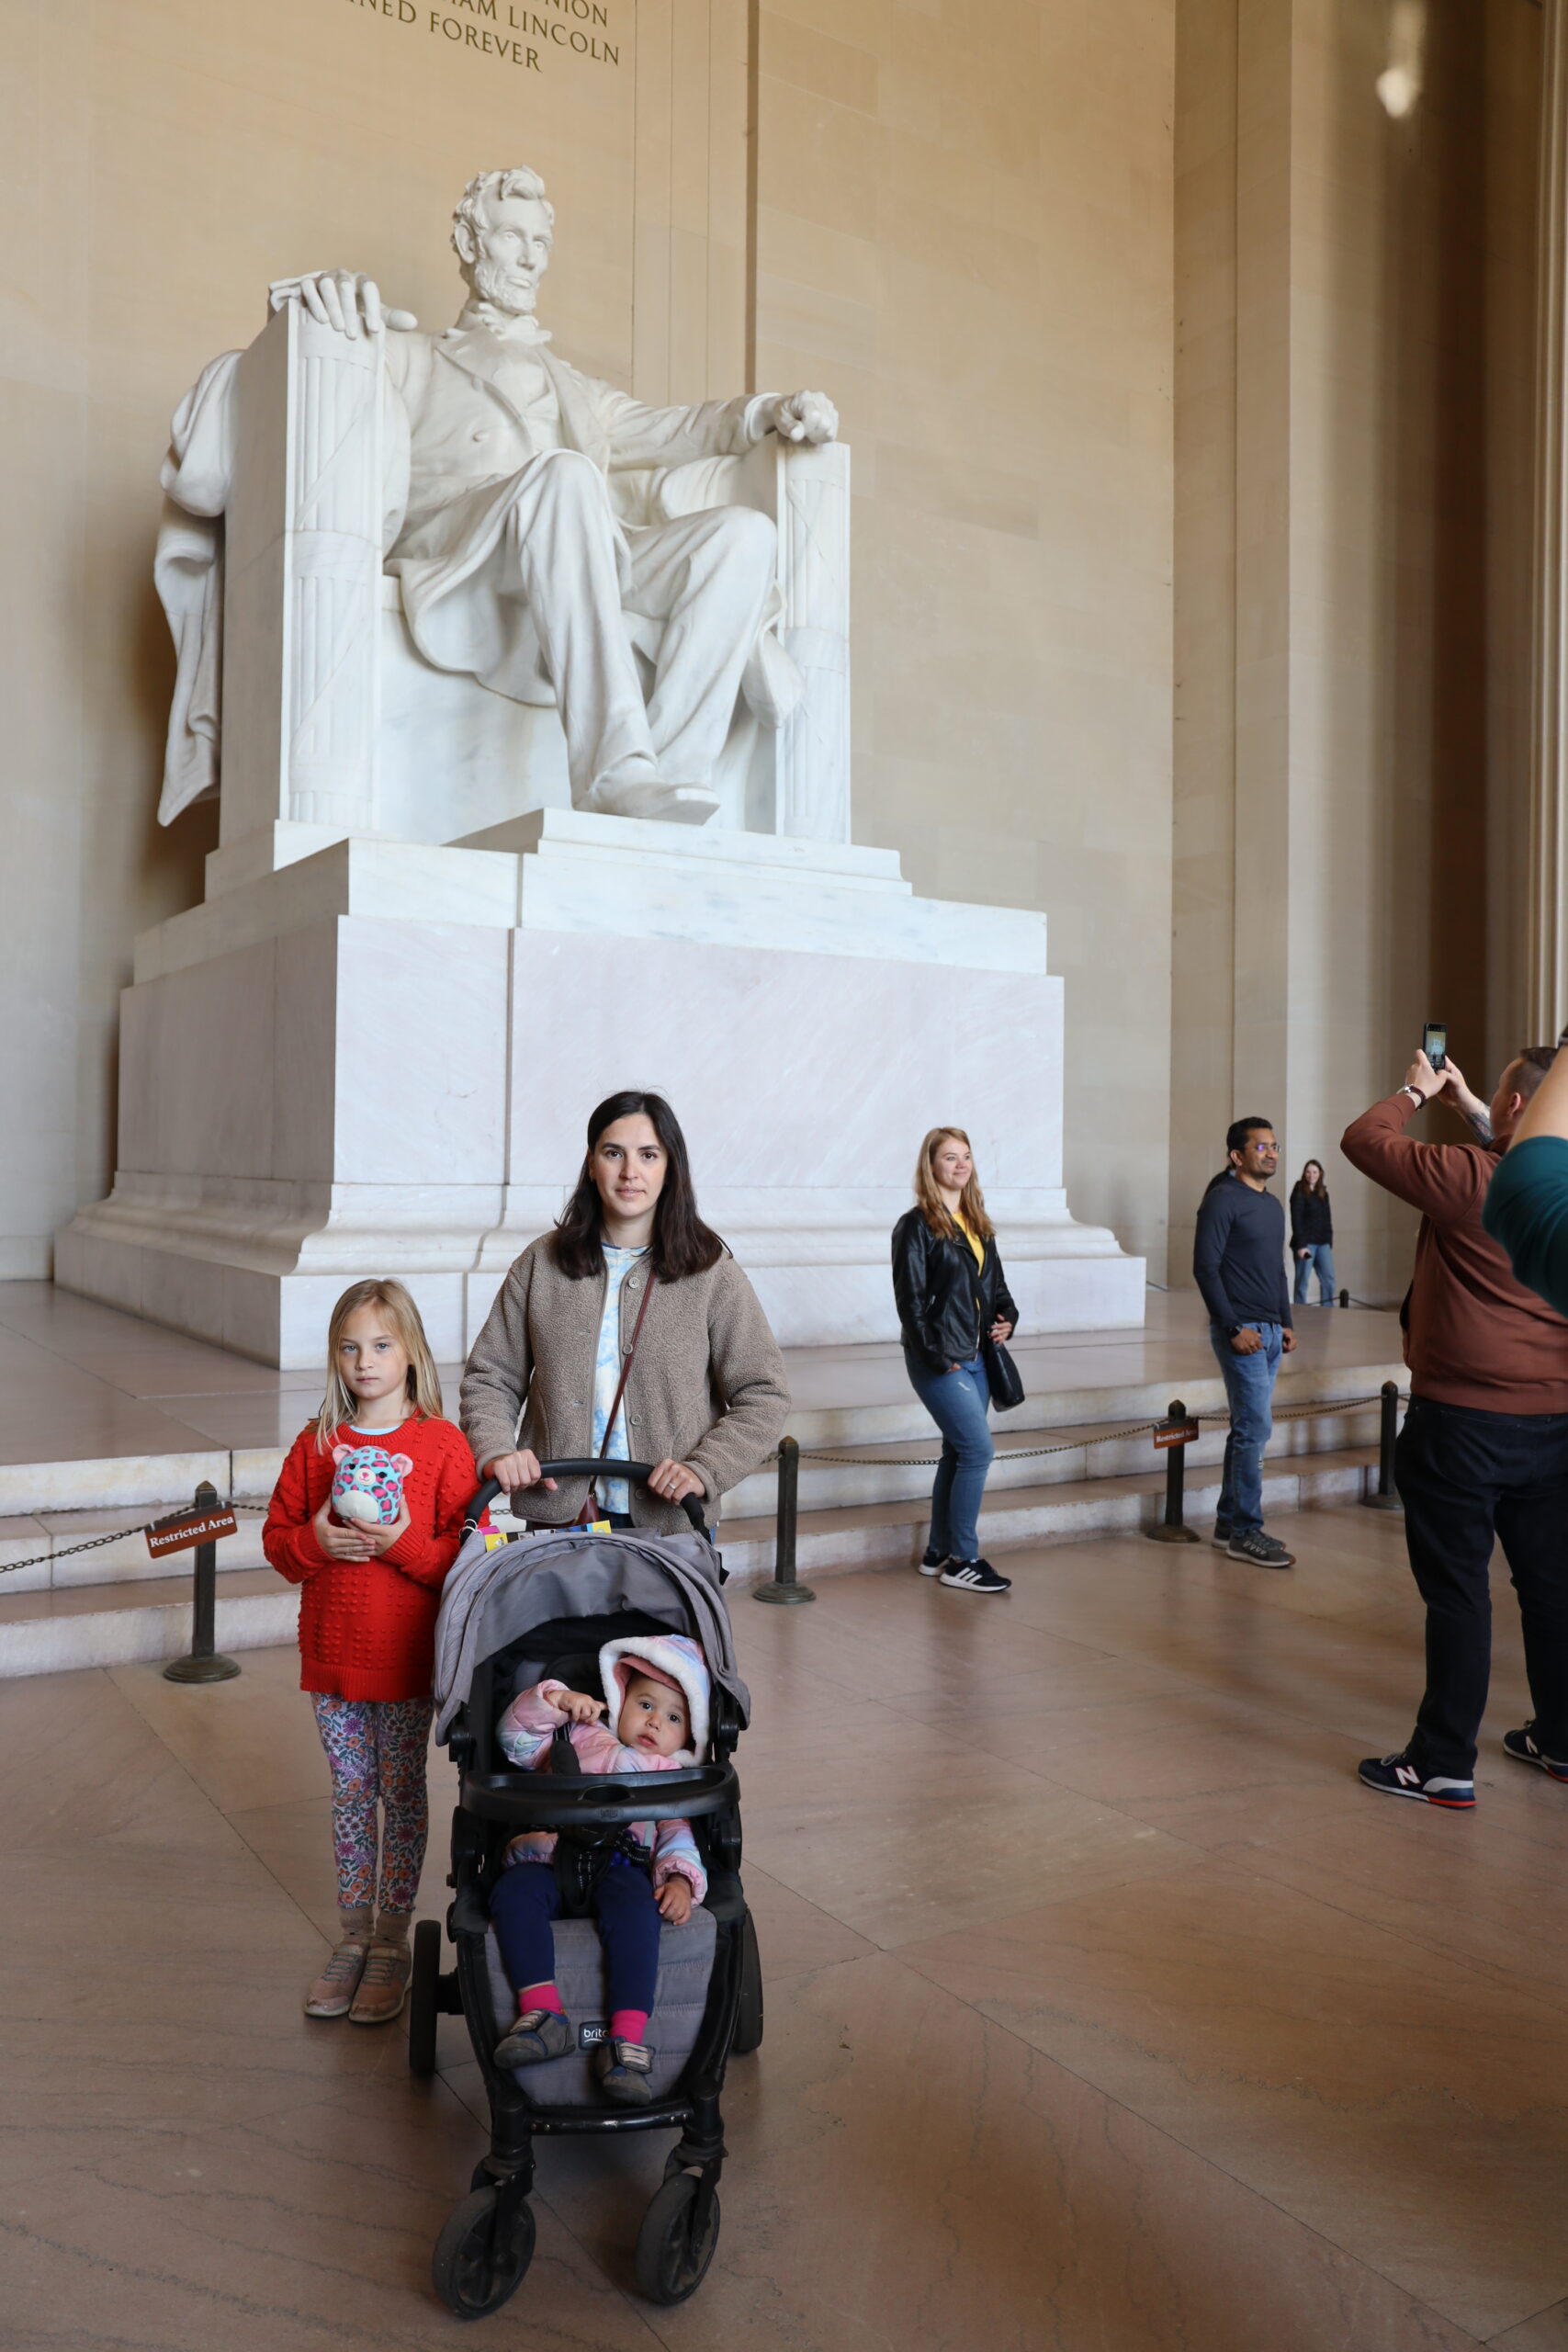 The Lincoln Memorial in Washington D.C.